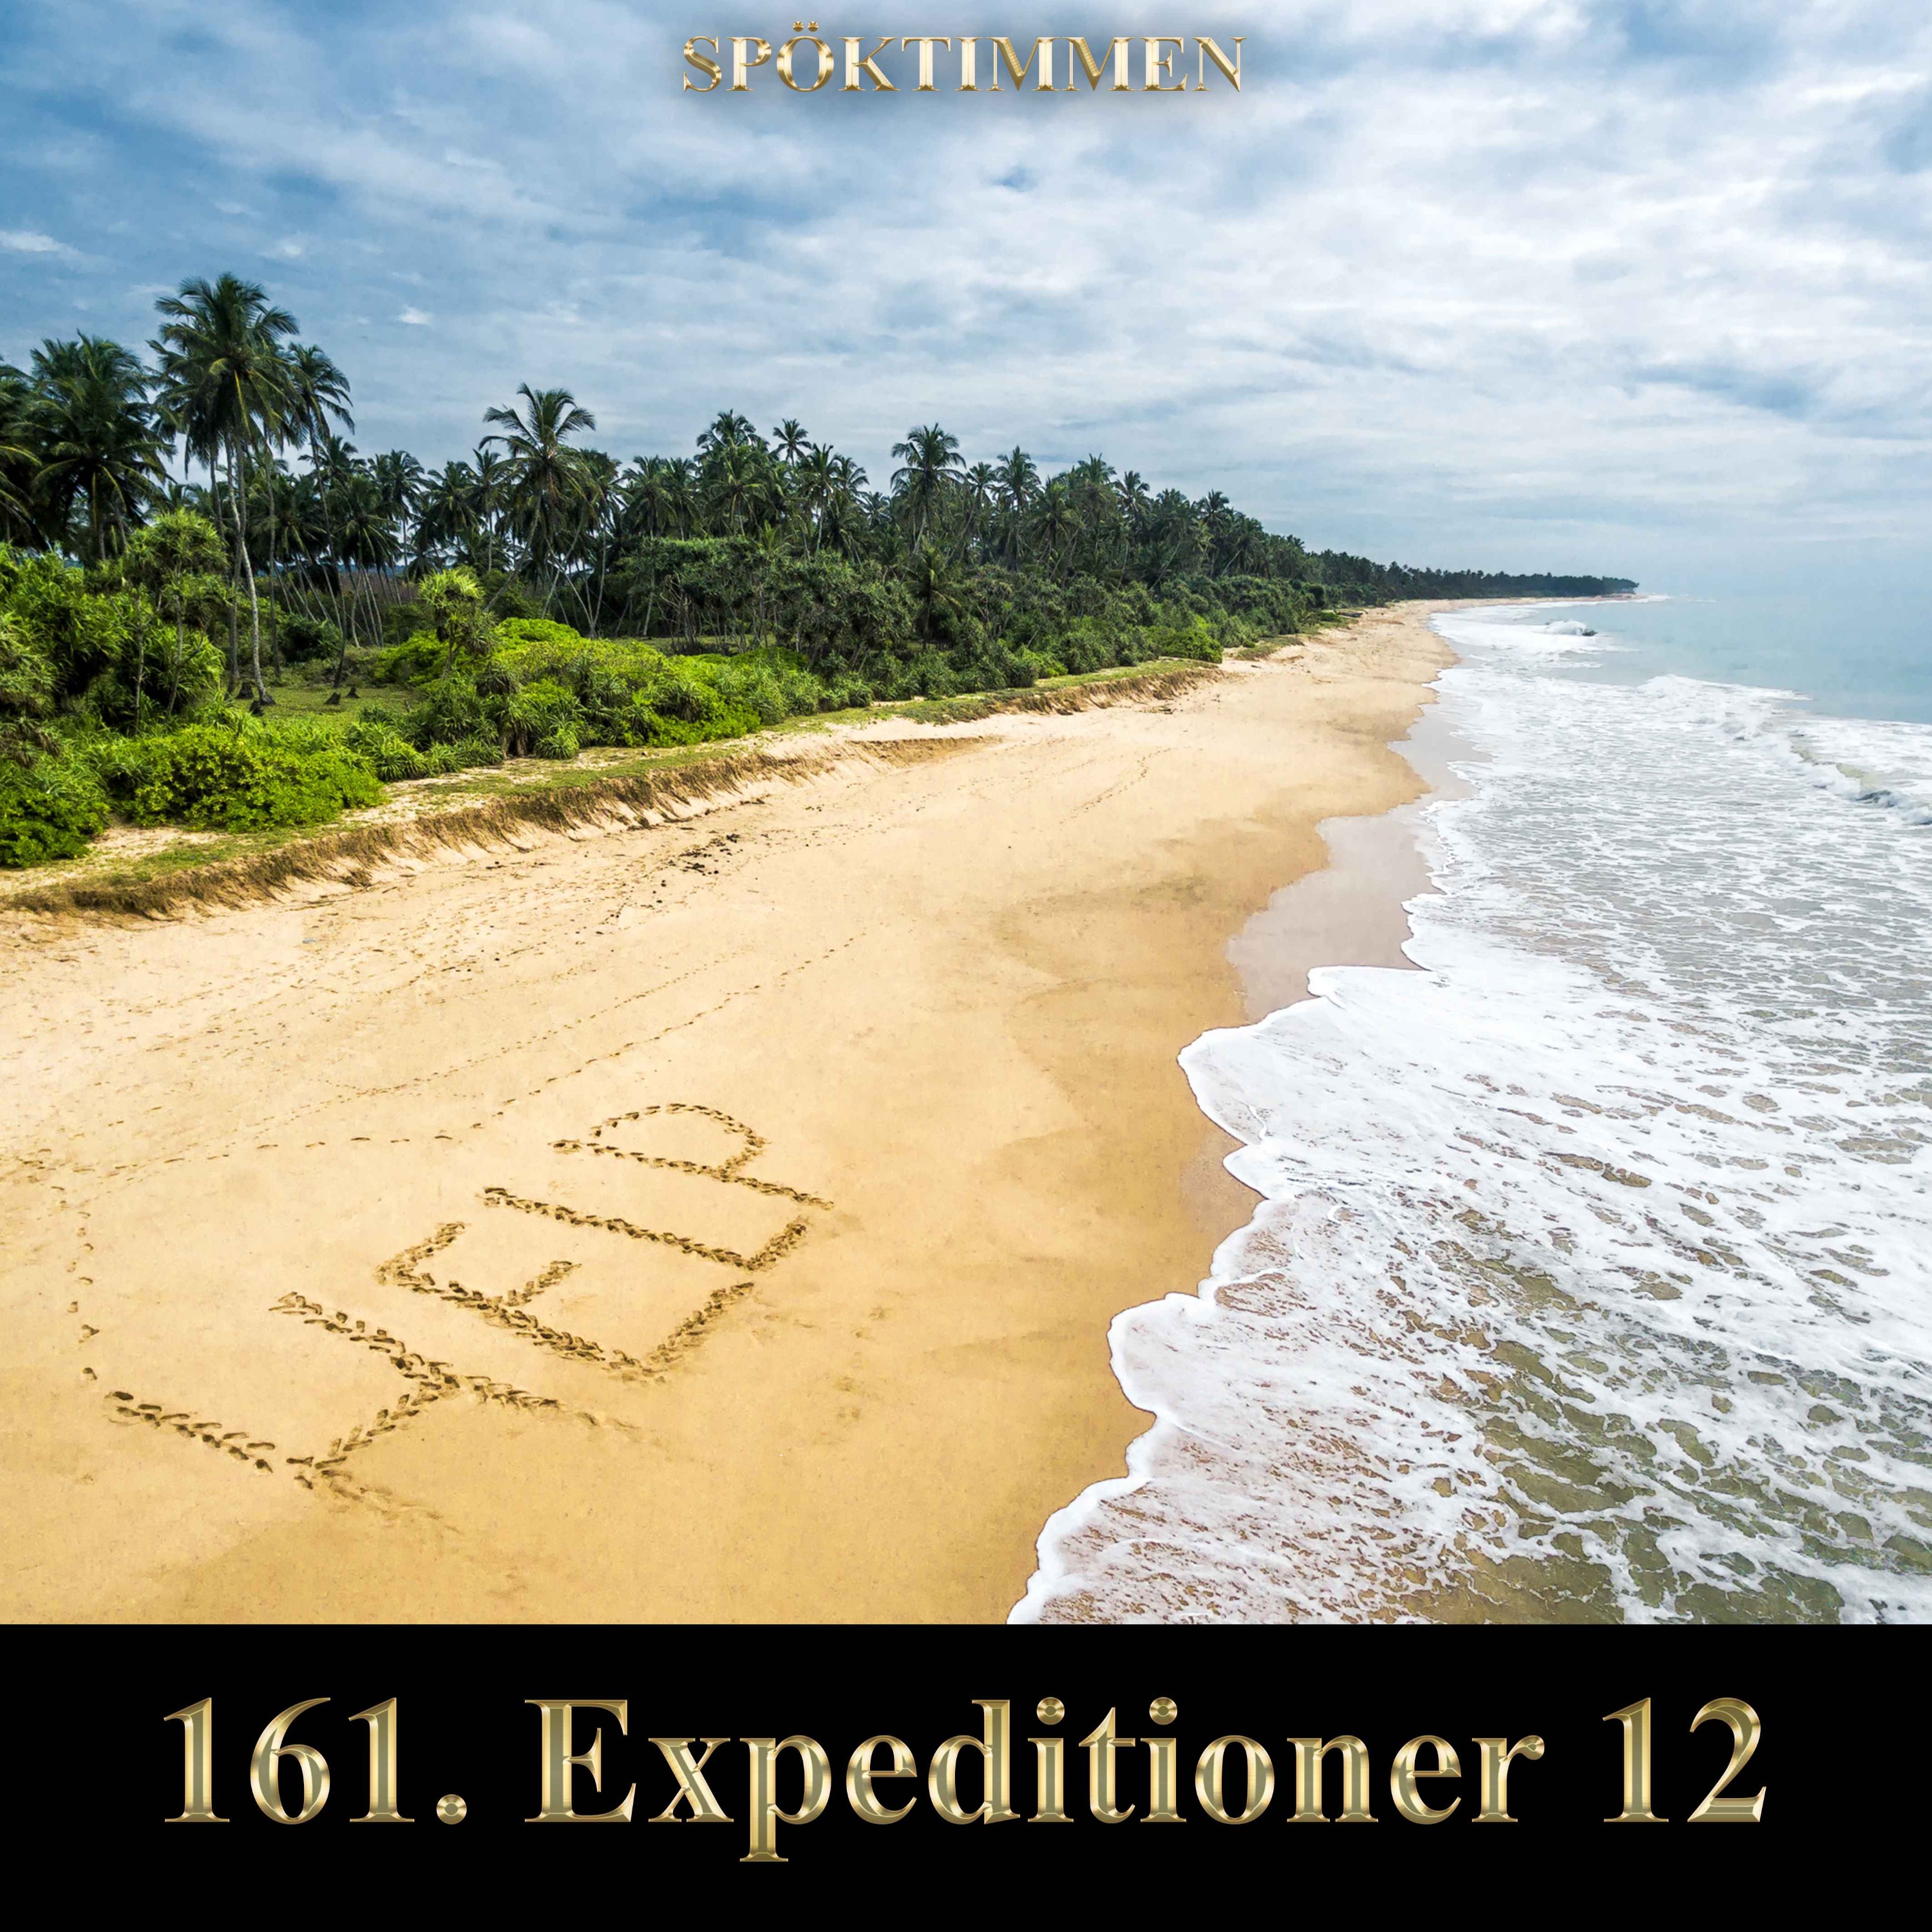 Expeditioner 12